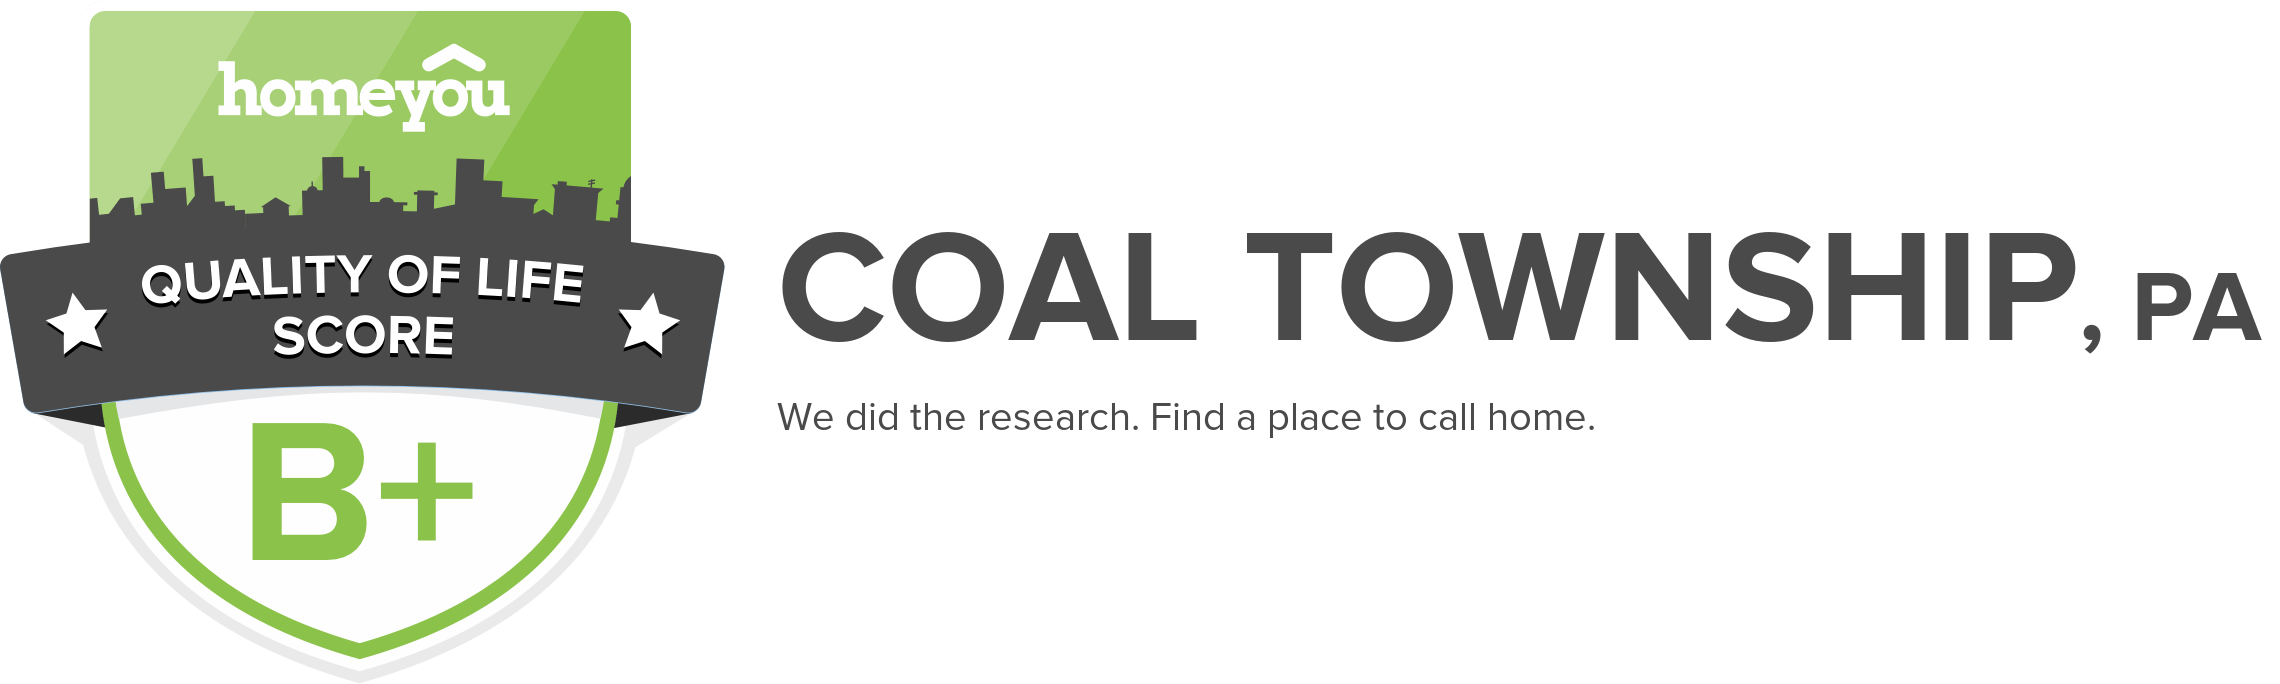 Coal township, PA